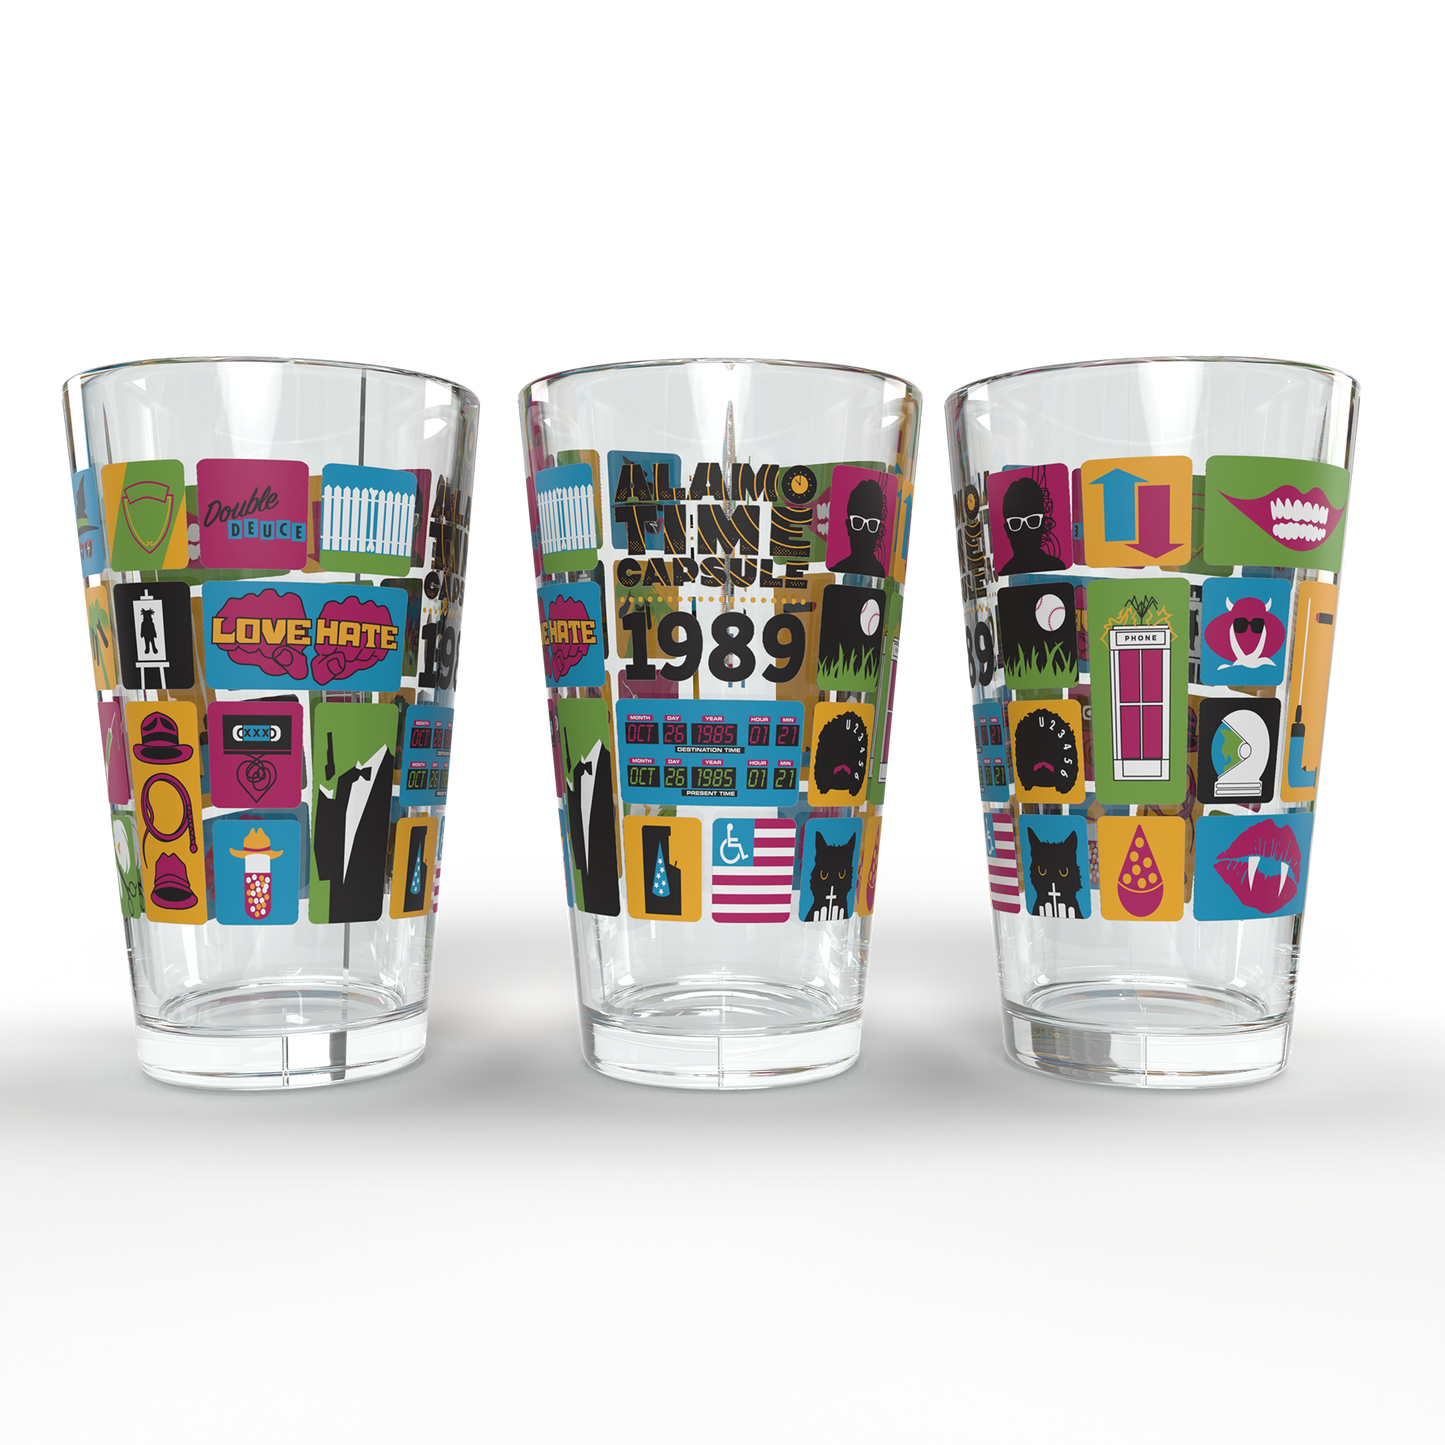 *PRE-ORDER* Alamo TIME CAPSULES 1989 Pint Glass